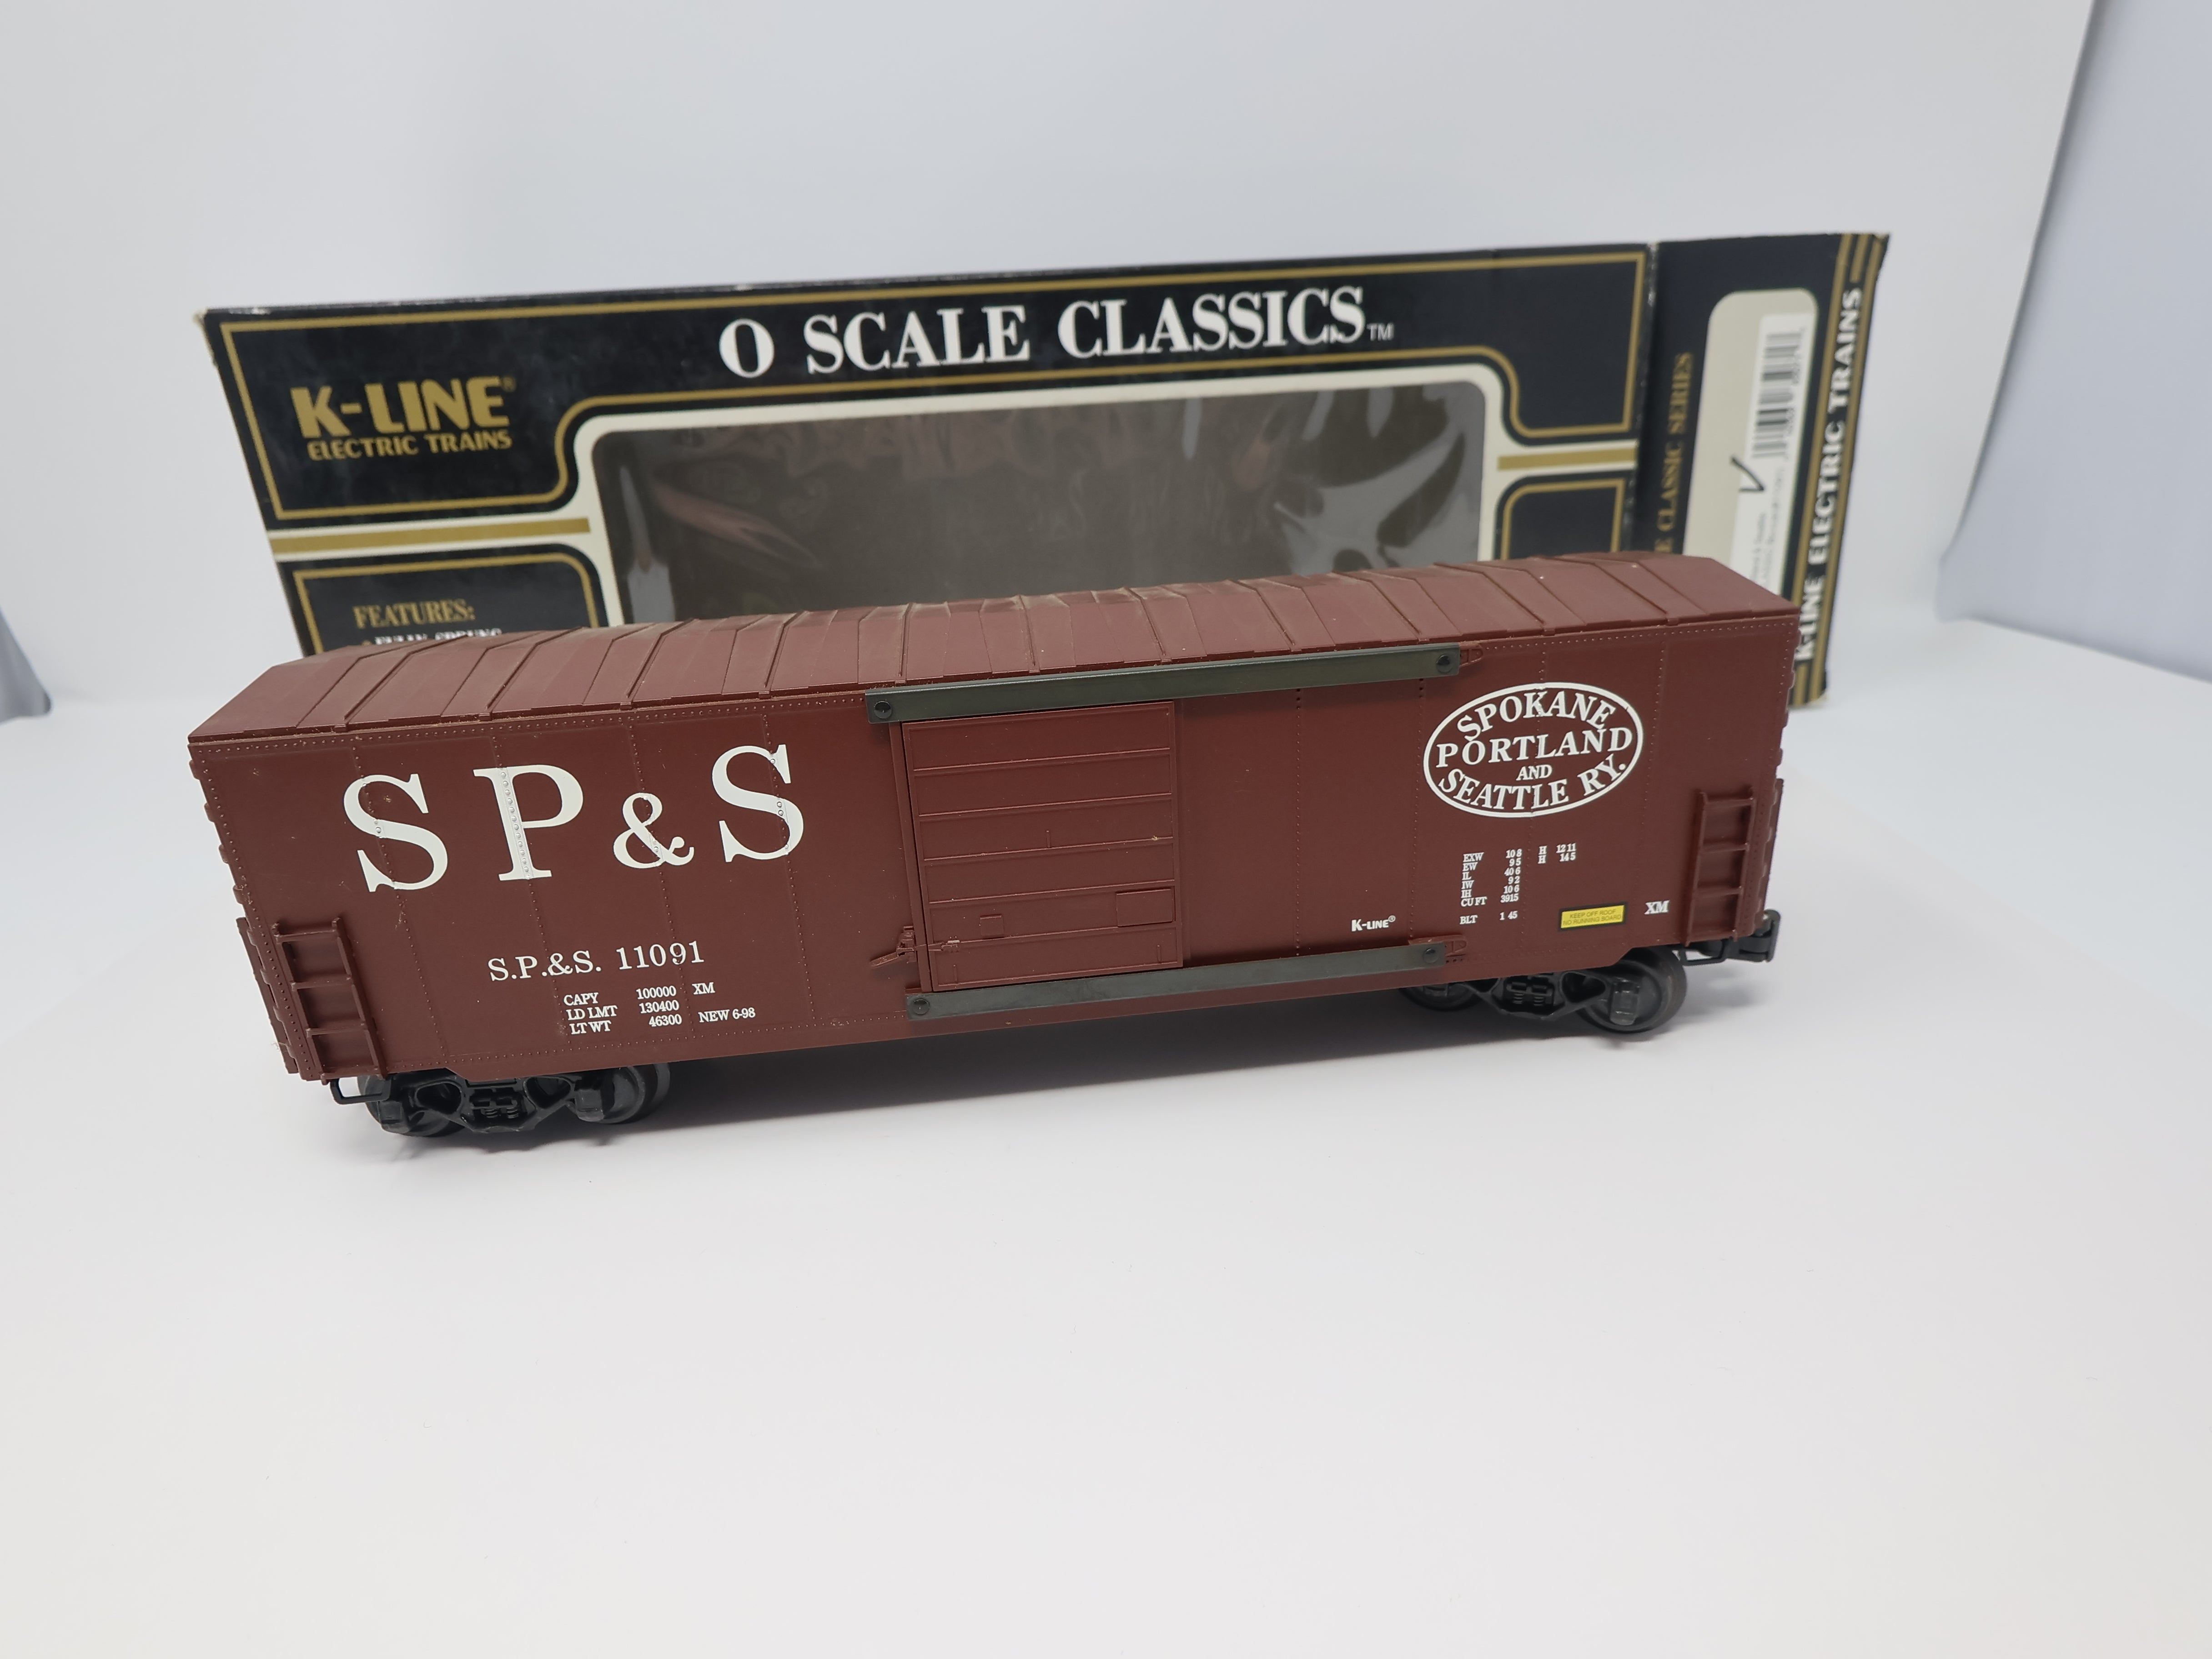 USED K-Line K764-4241 O, Classic Box Car, Spokane, Portland and Seattle Railway SP&S #11091